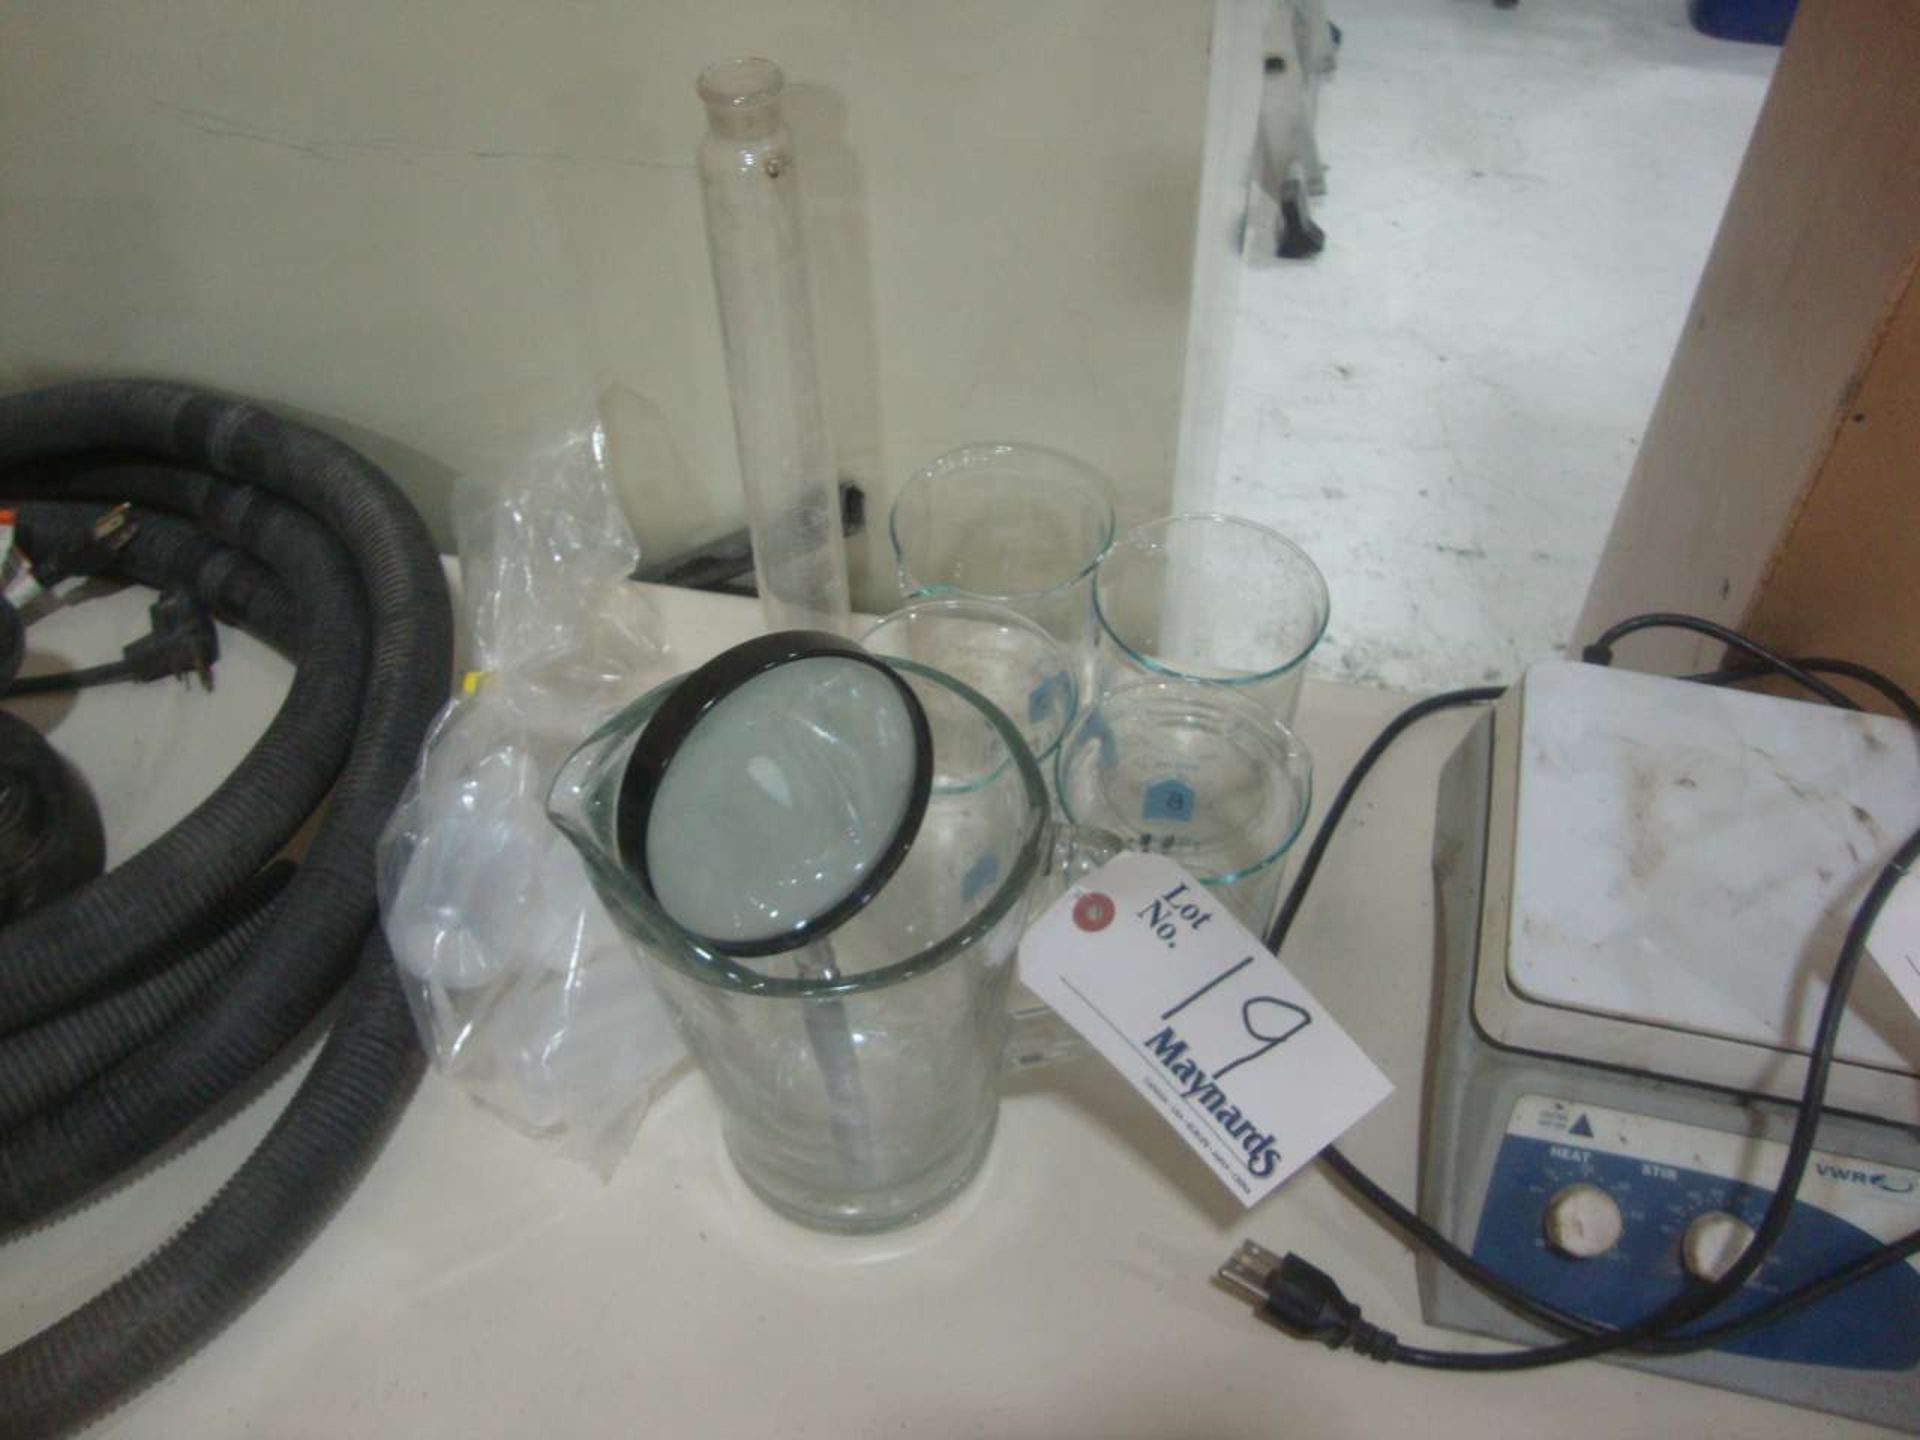 Lab glassware